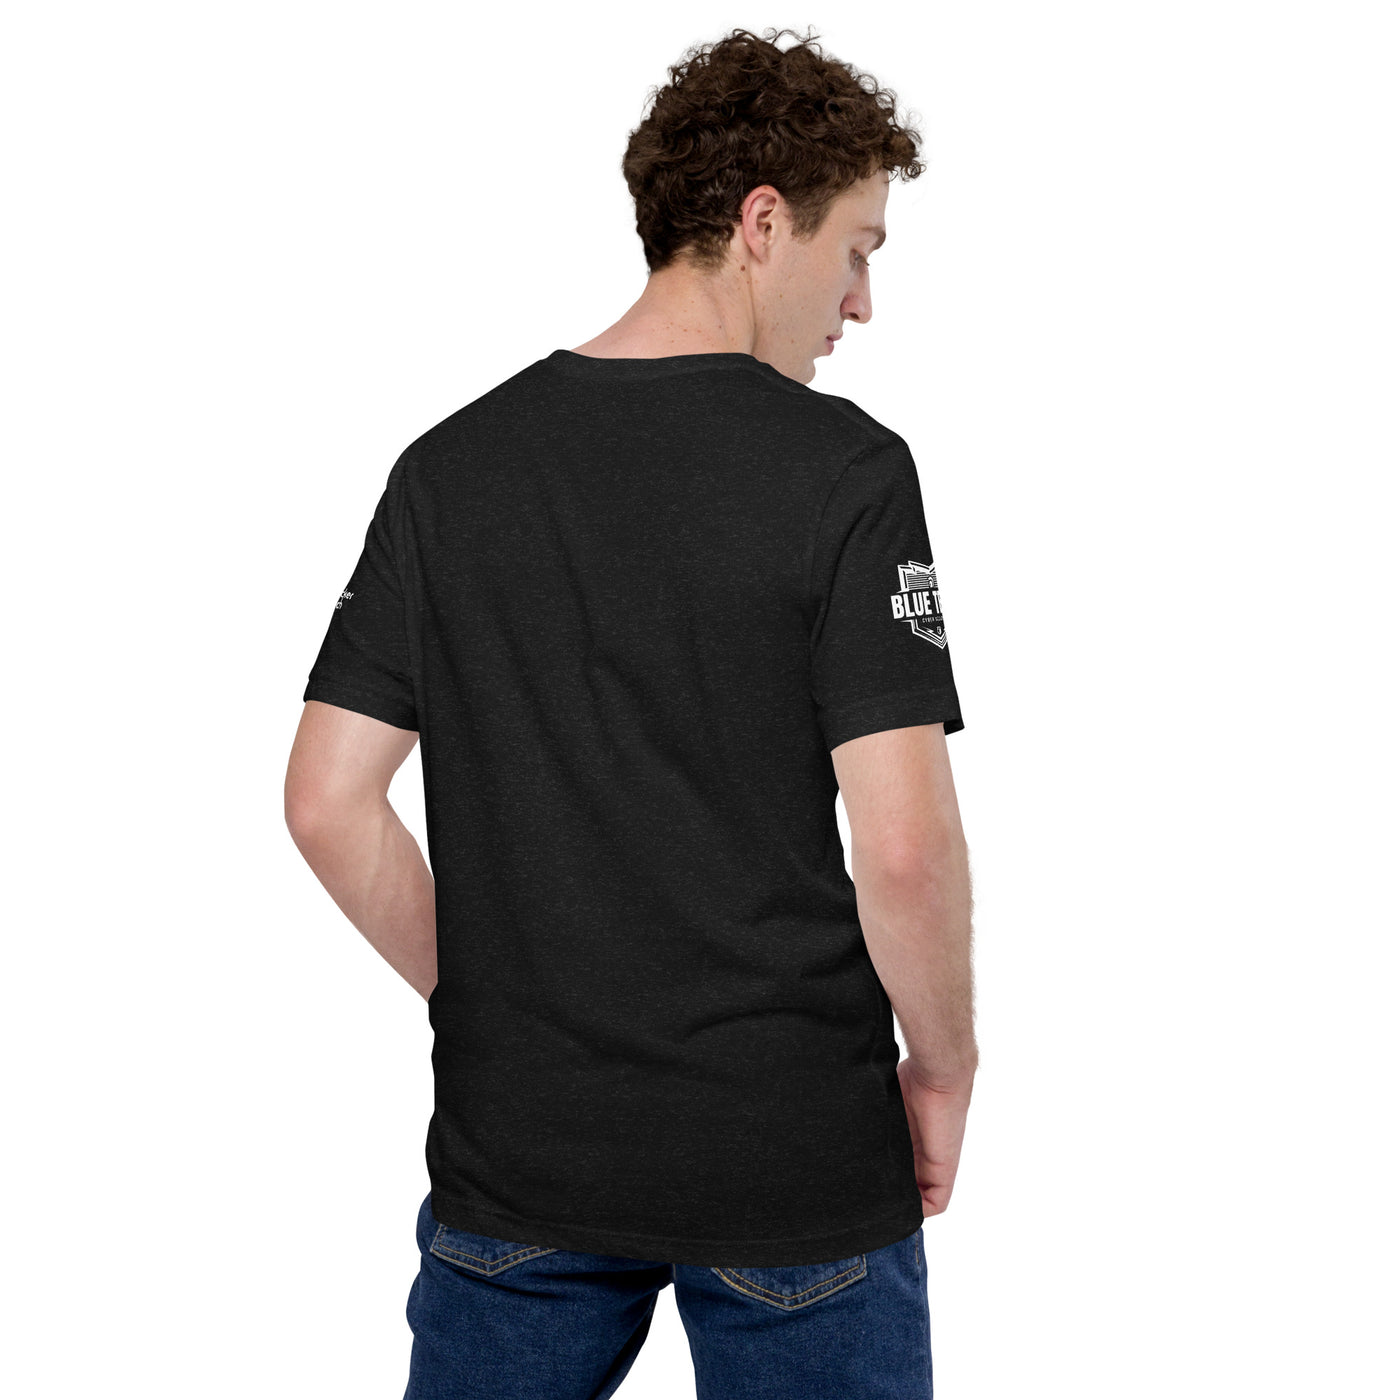 Cyber Security Blue Team v1 - Short-Sleeve Unisex T-Shirt